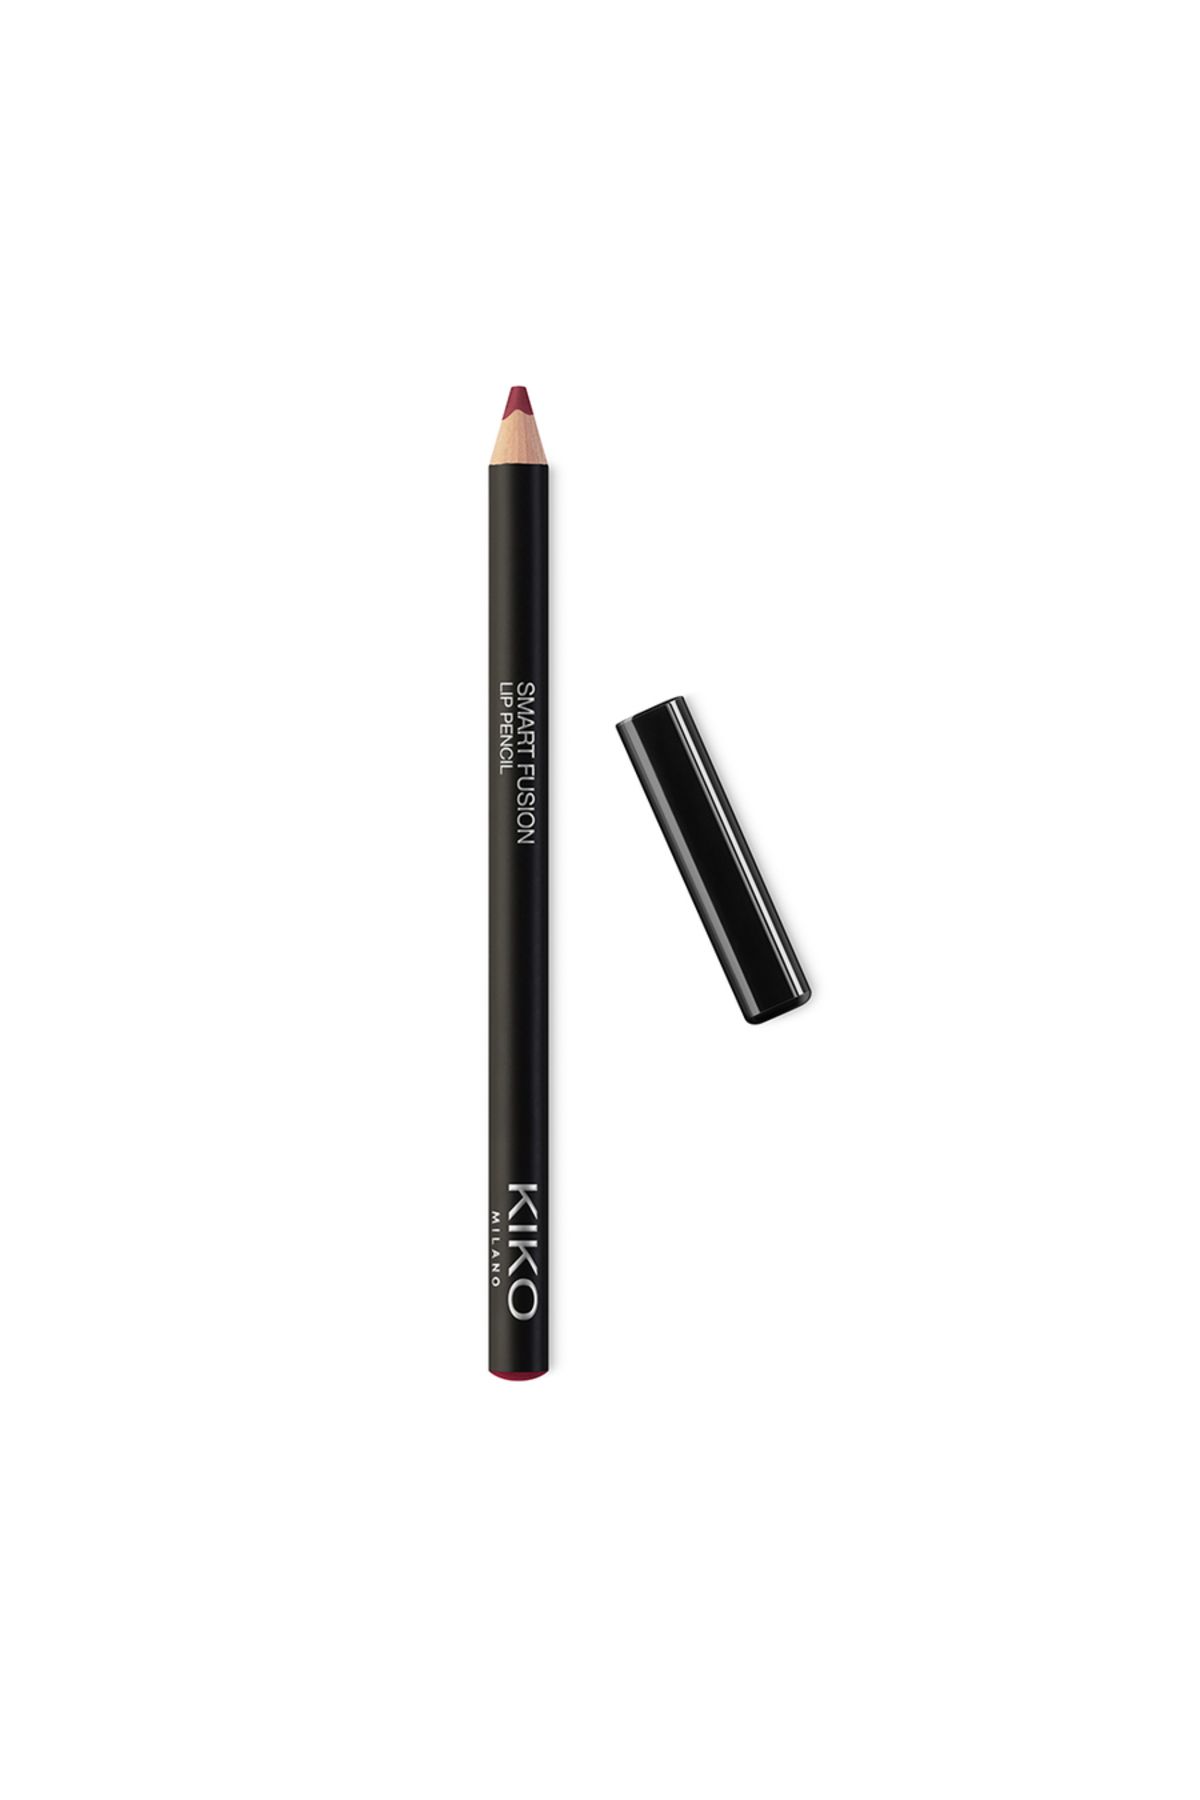 KIKO DUDAK KALEMİ - Smart Fusion Lip Pencil - 517 Burgundy